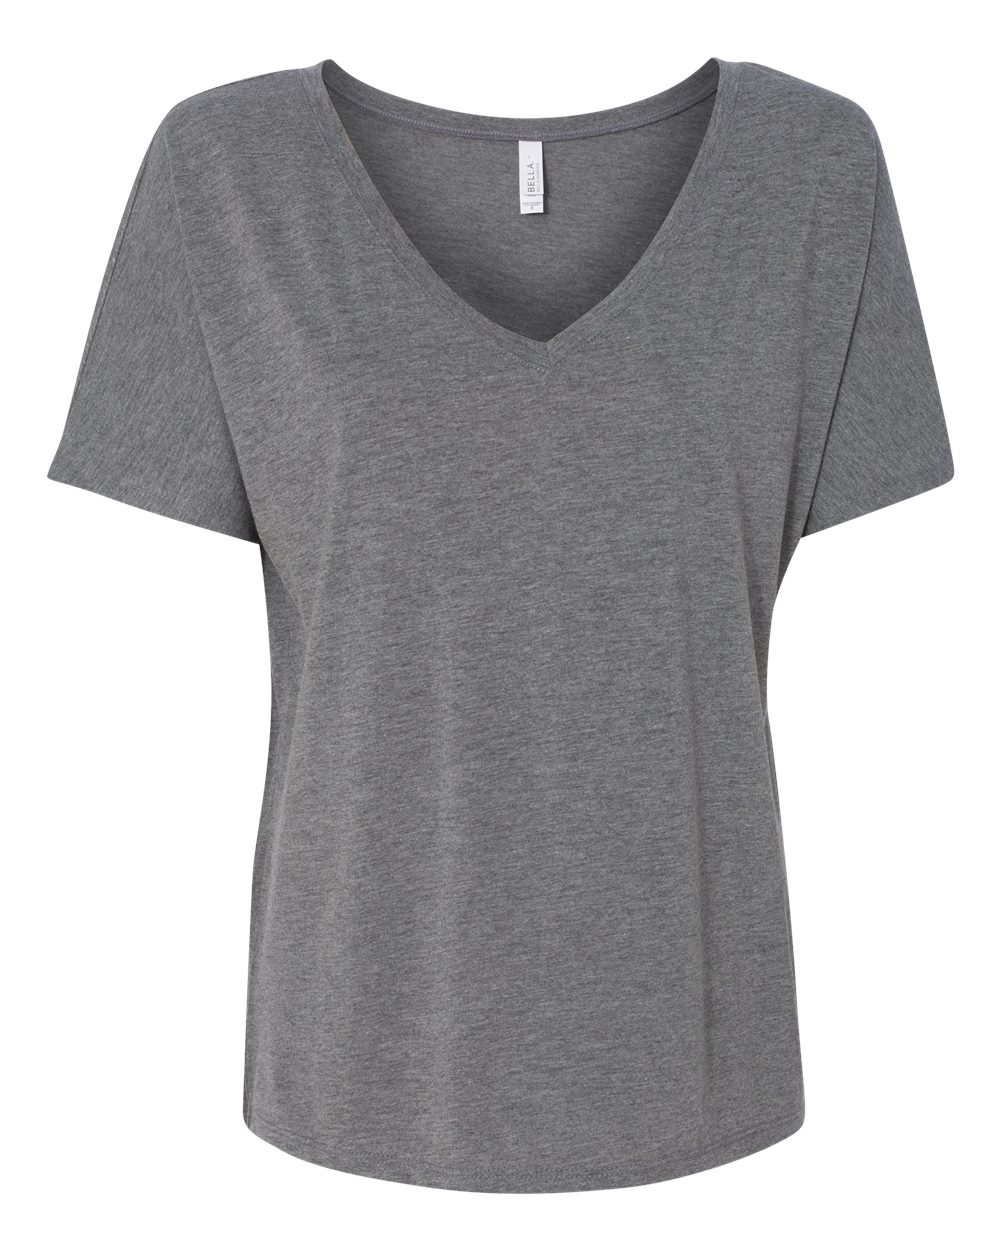 Bella 8815 - Ladies' Flowy Simple V-Neck Tee $8.54 - T-Shirts